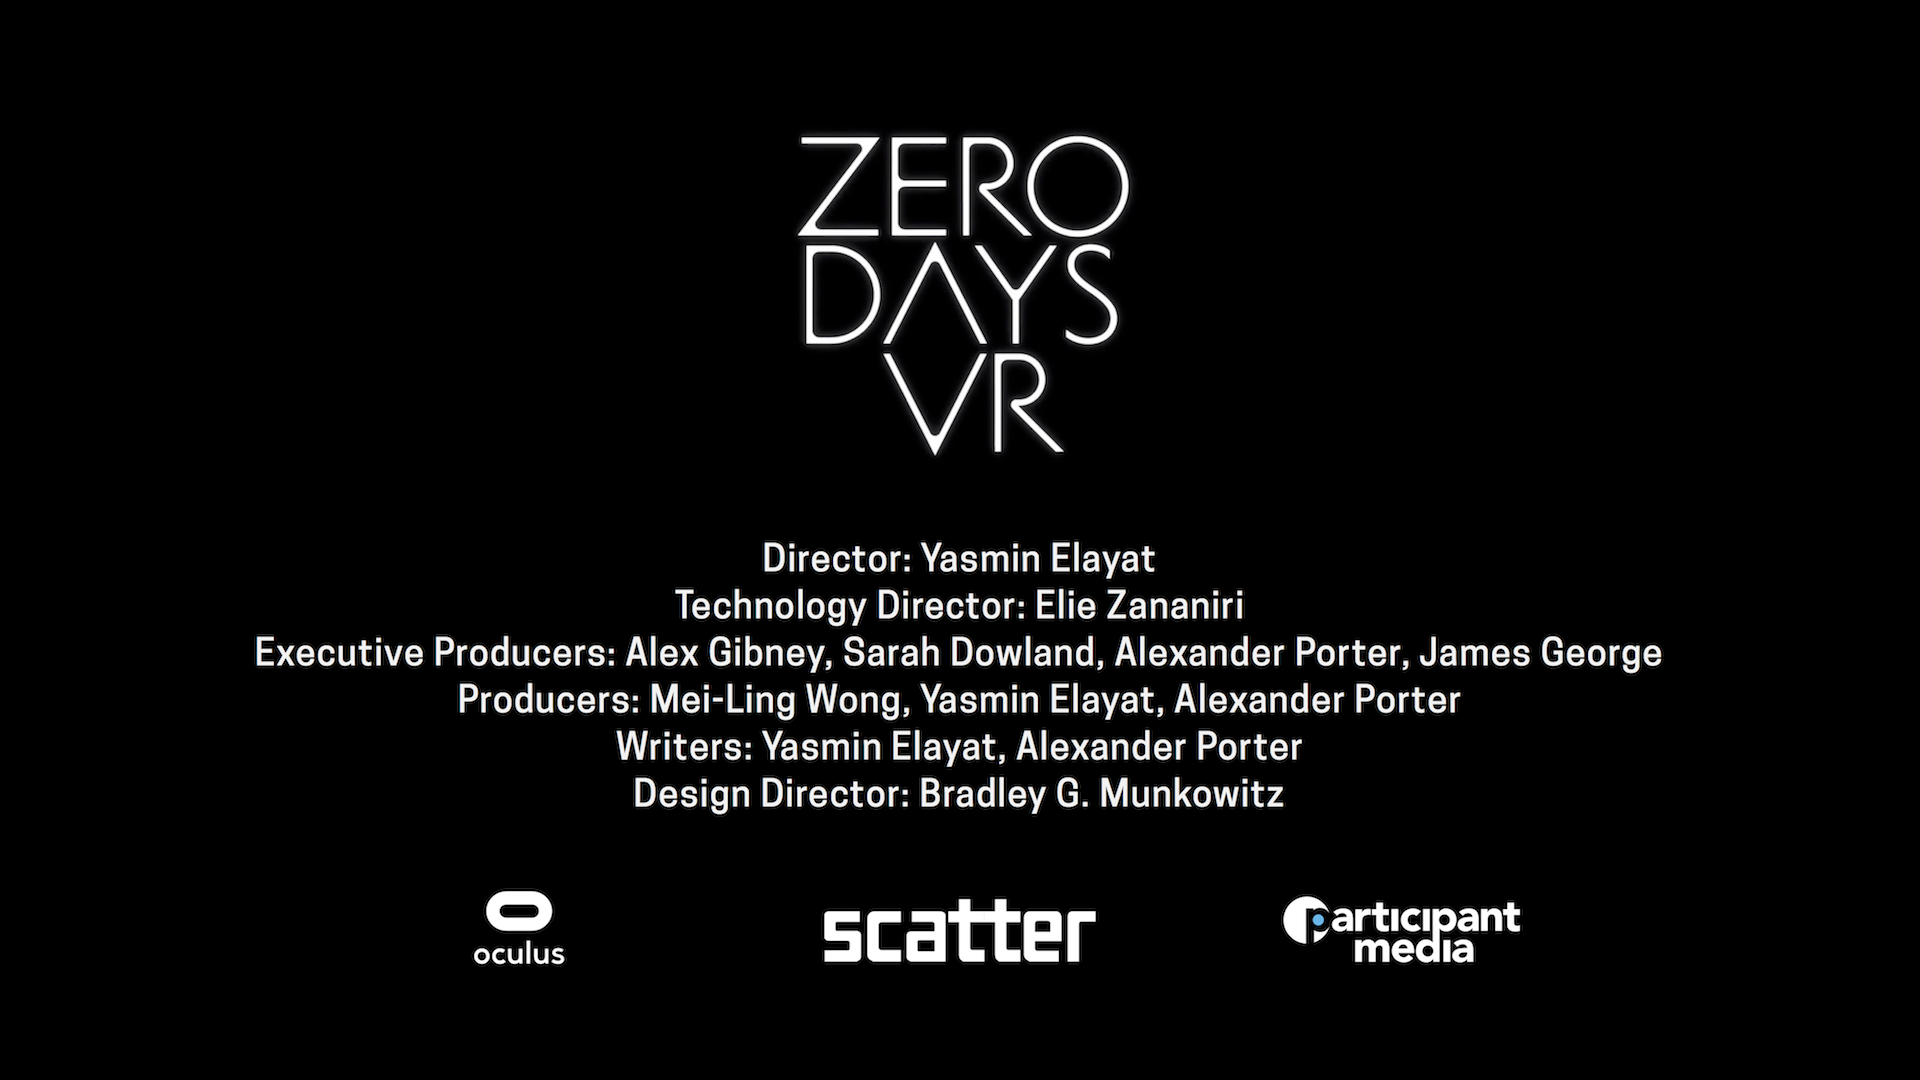 Zero Days VR credits